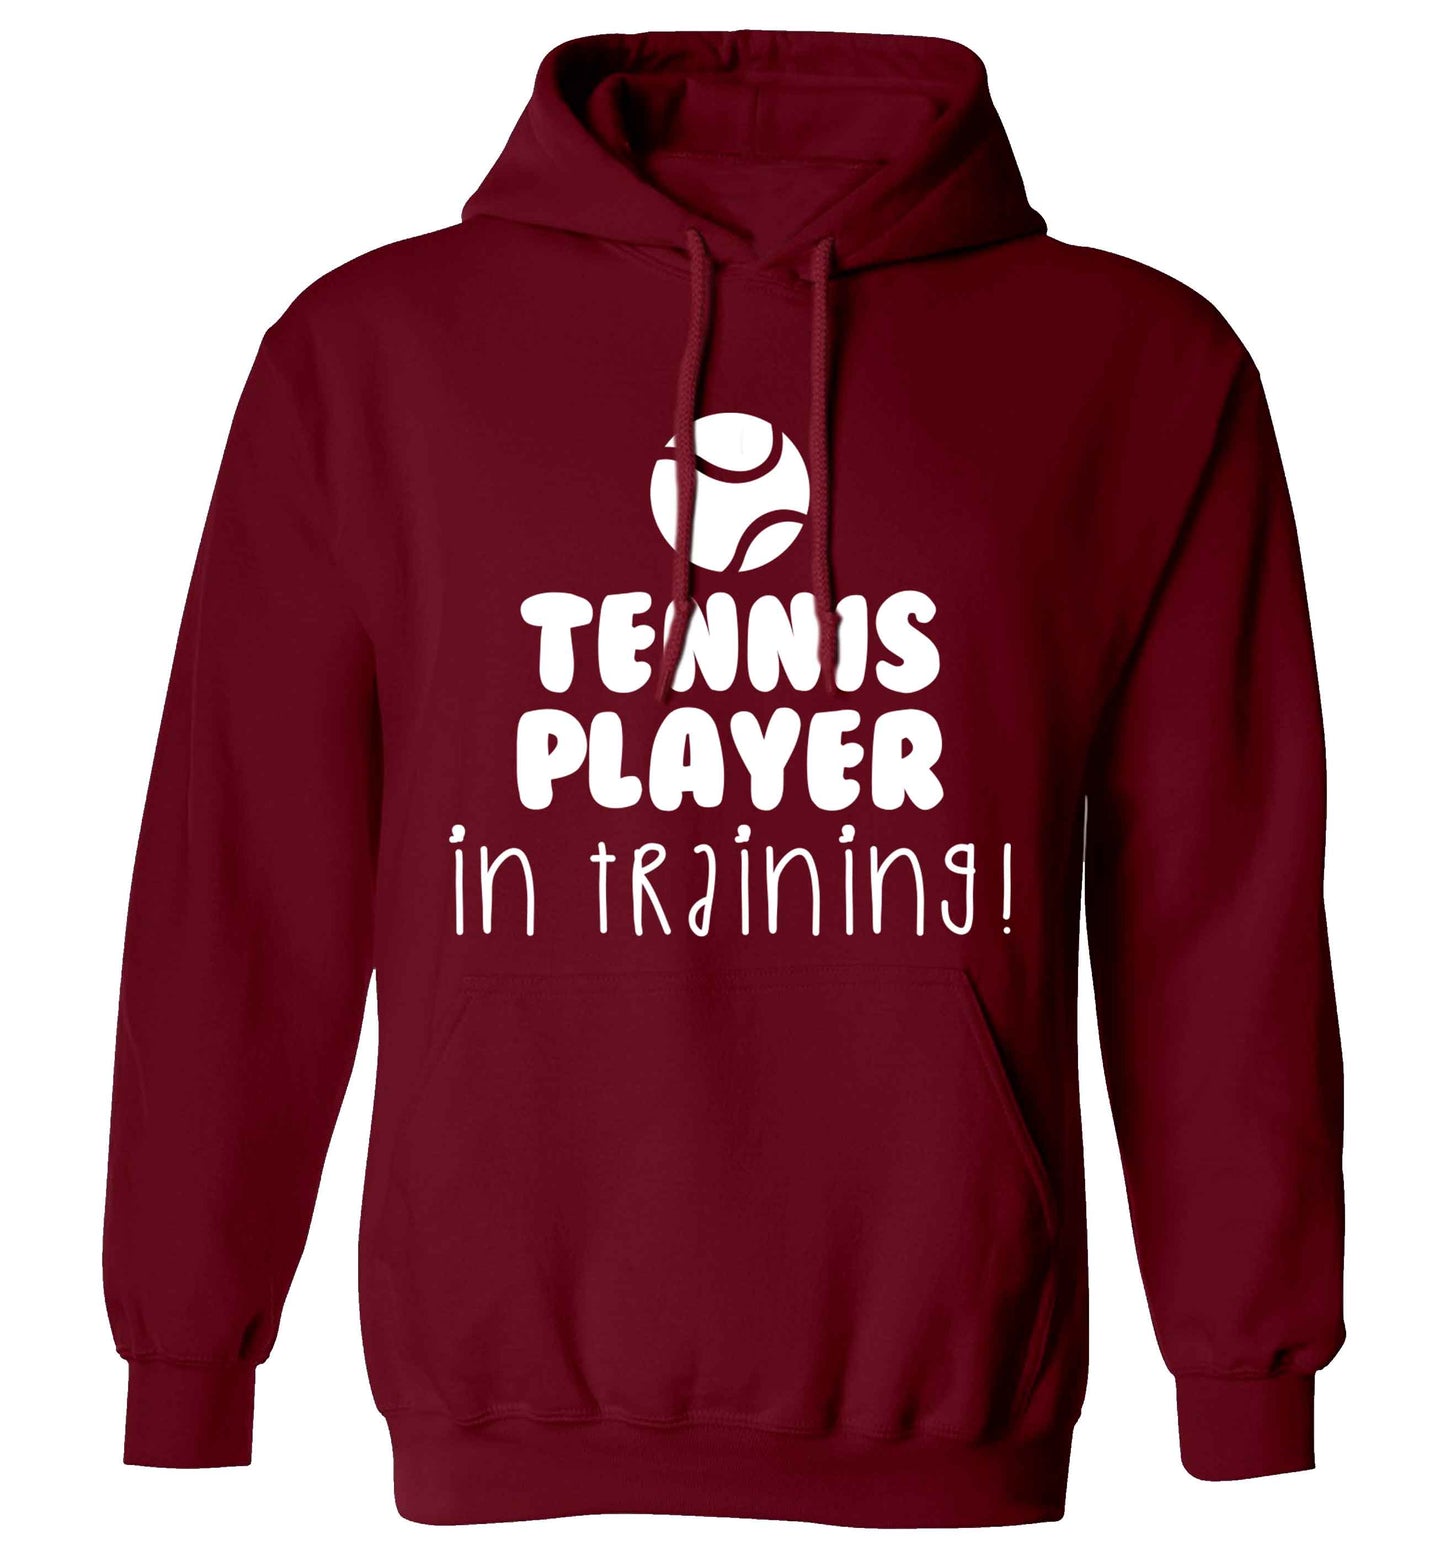 Tennis player in training adults unisex maroon hoodie 2XL